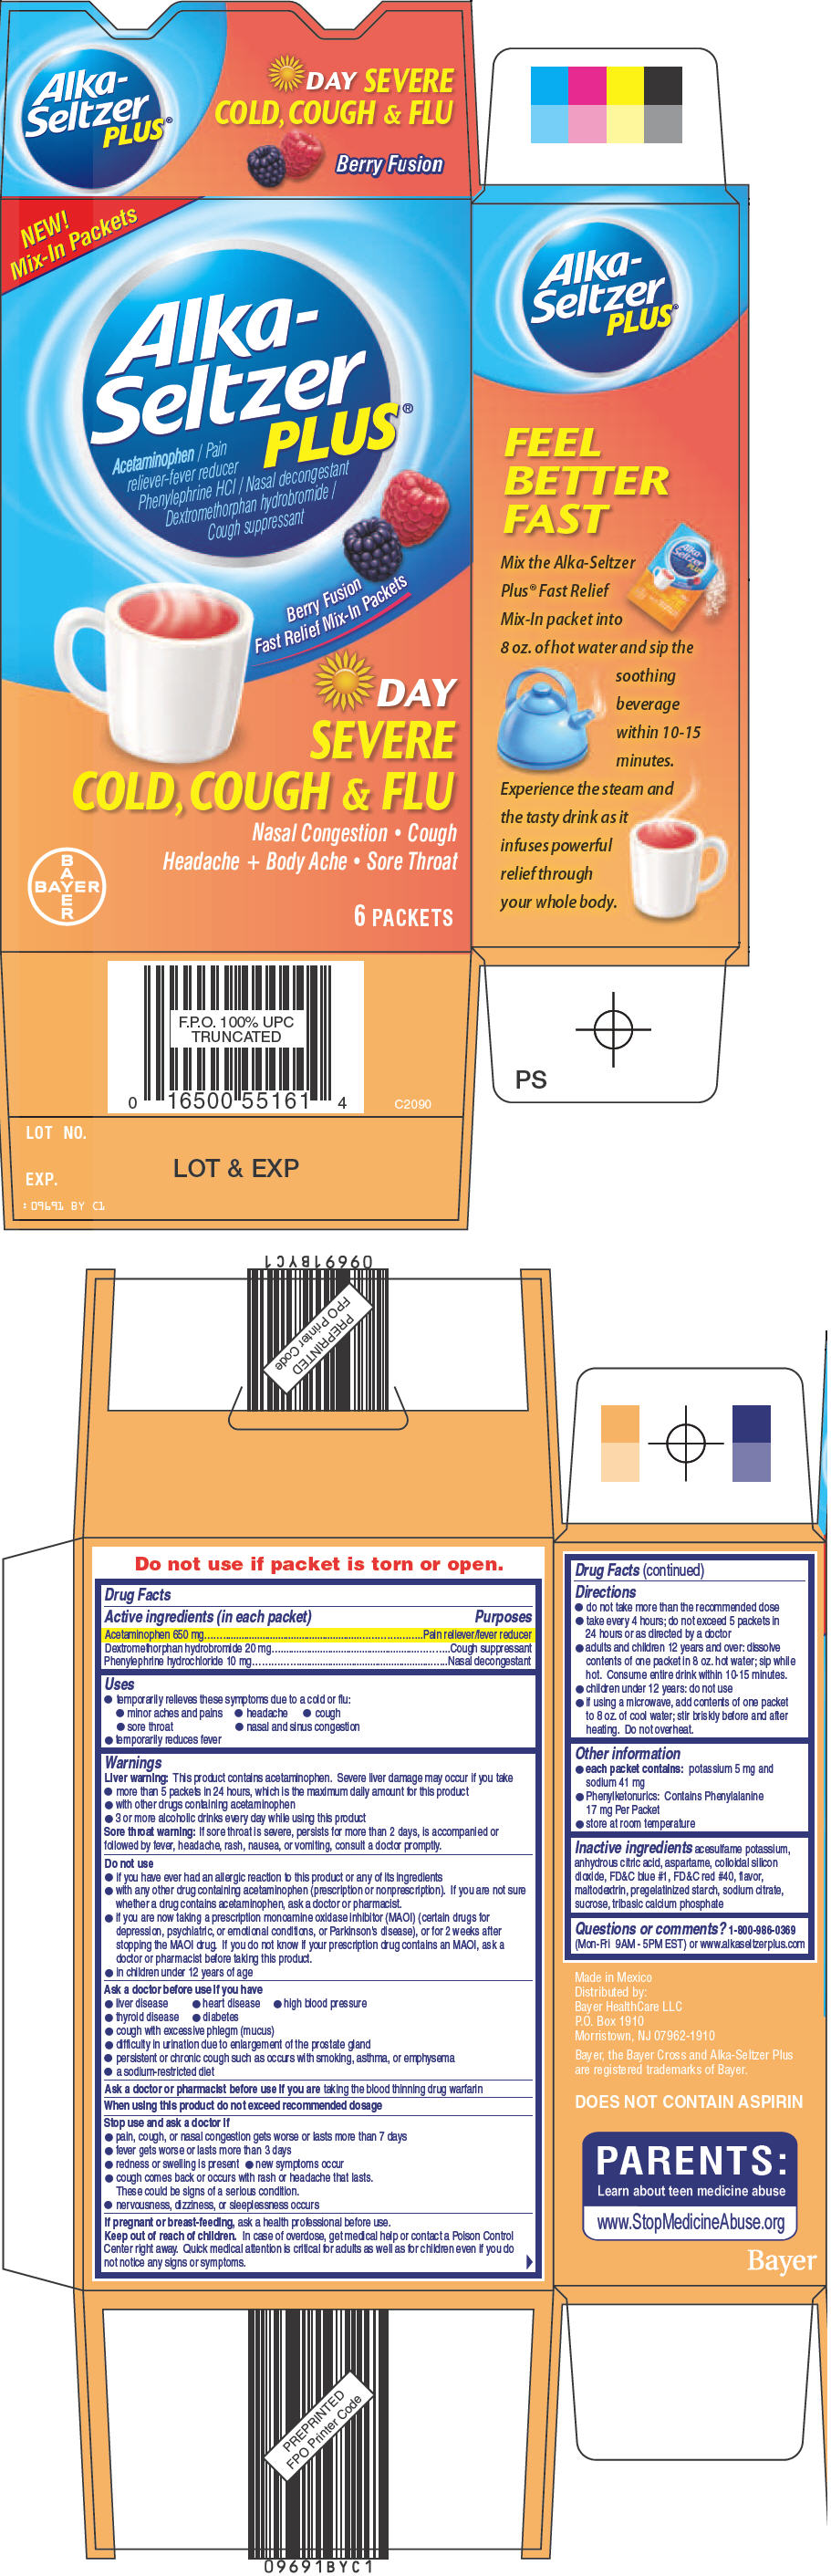 PRINCIPAL DISPLAY PANEL - 6 Packet Carton